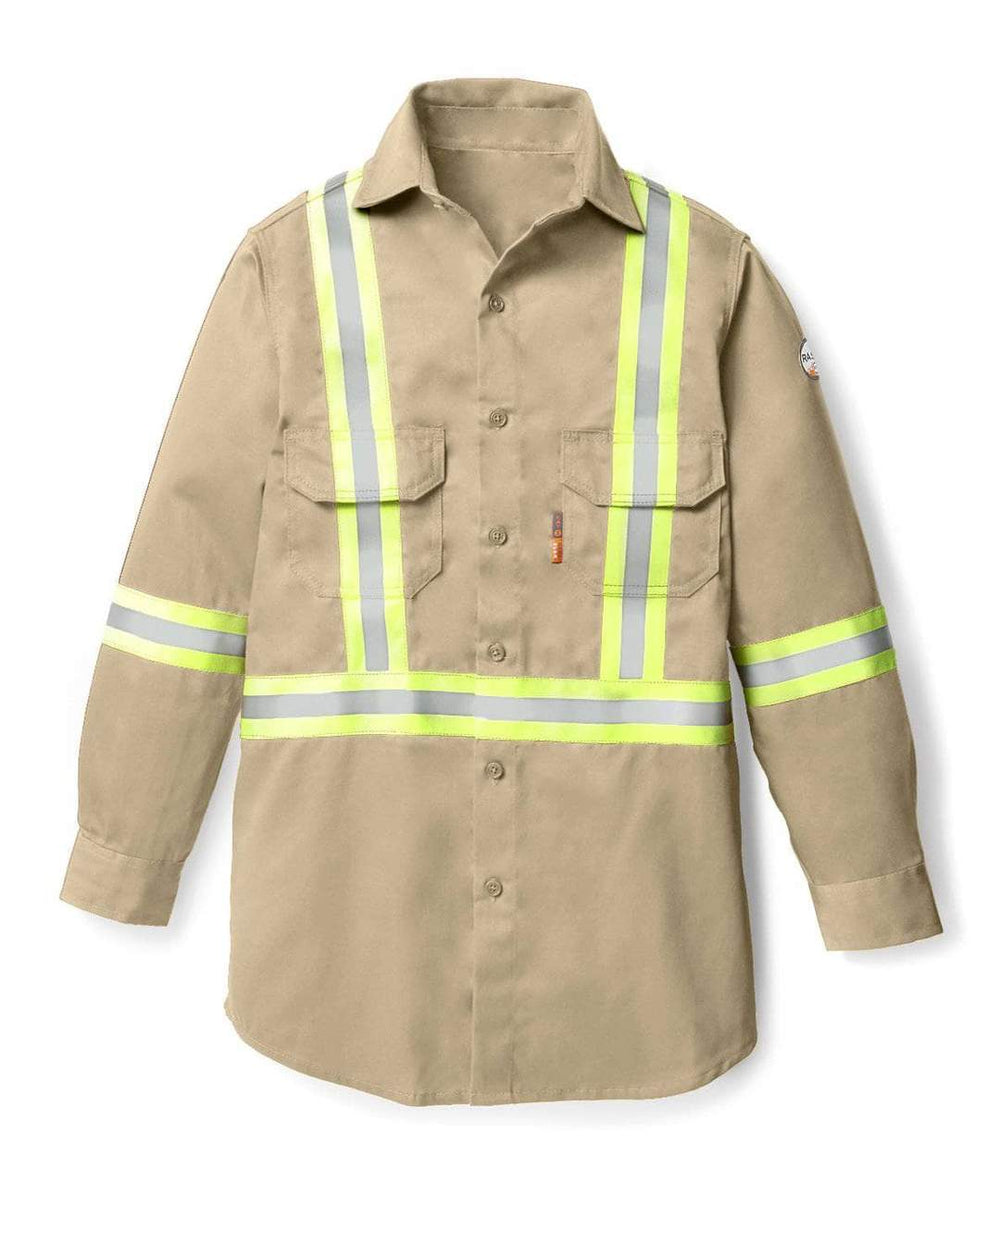 Rasco FR Men's Light Weight Khaki Work Shirt W/Reflective Striping FR1403KH